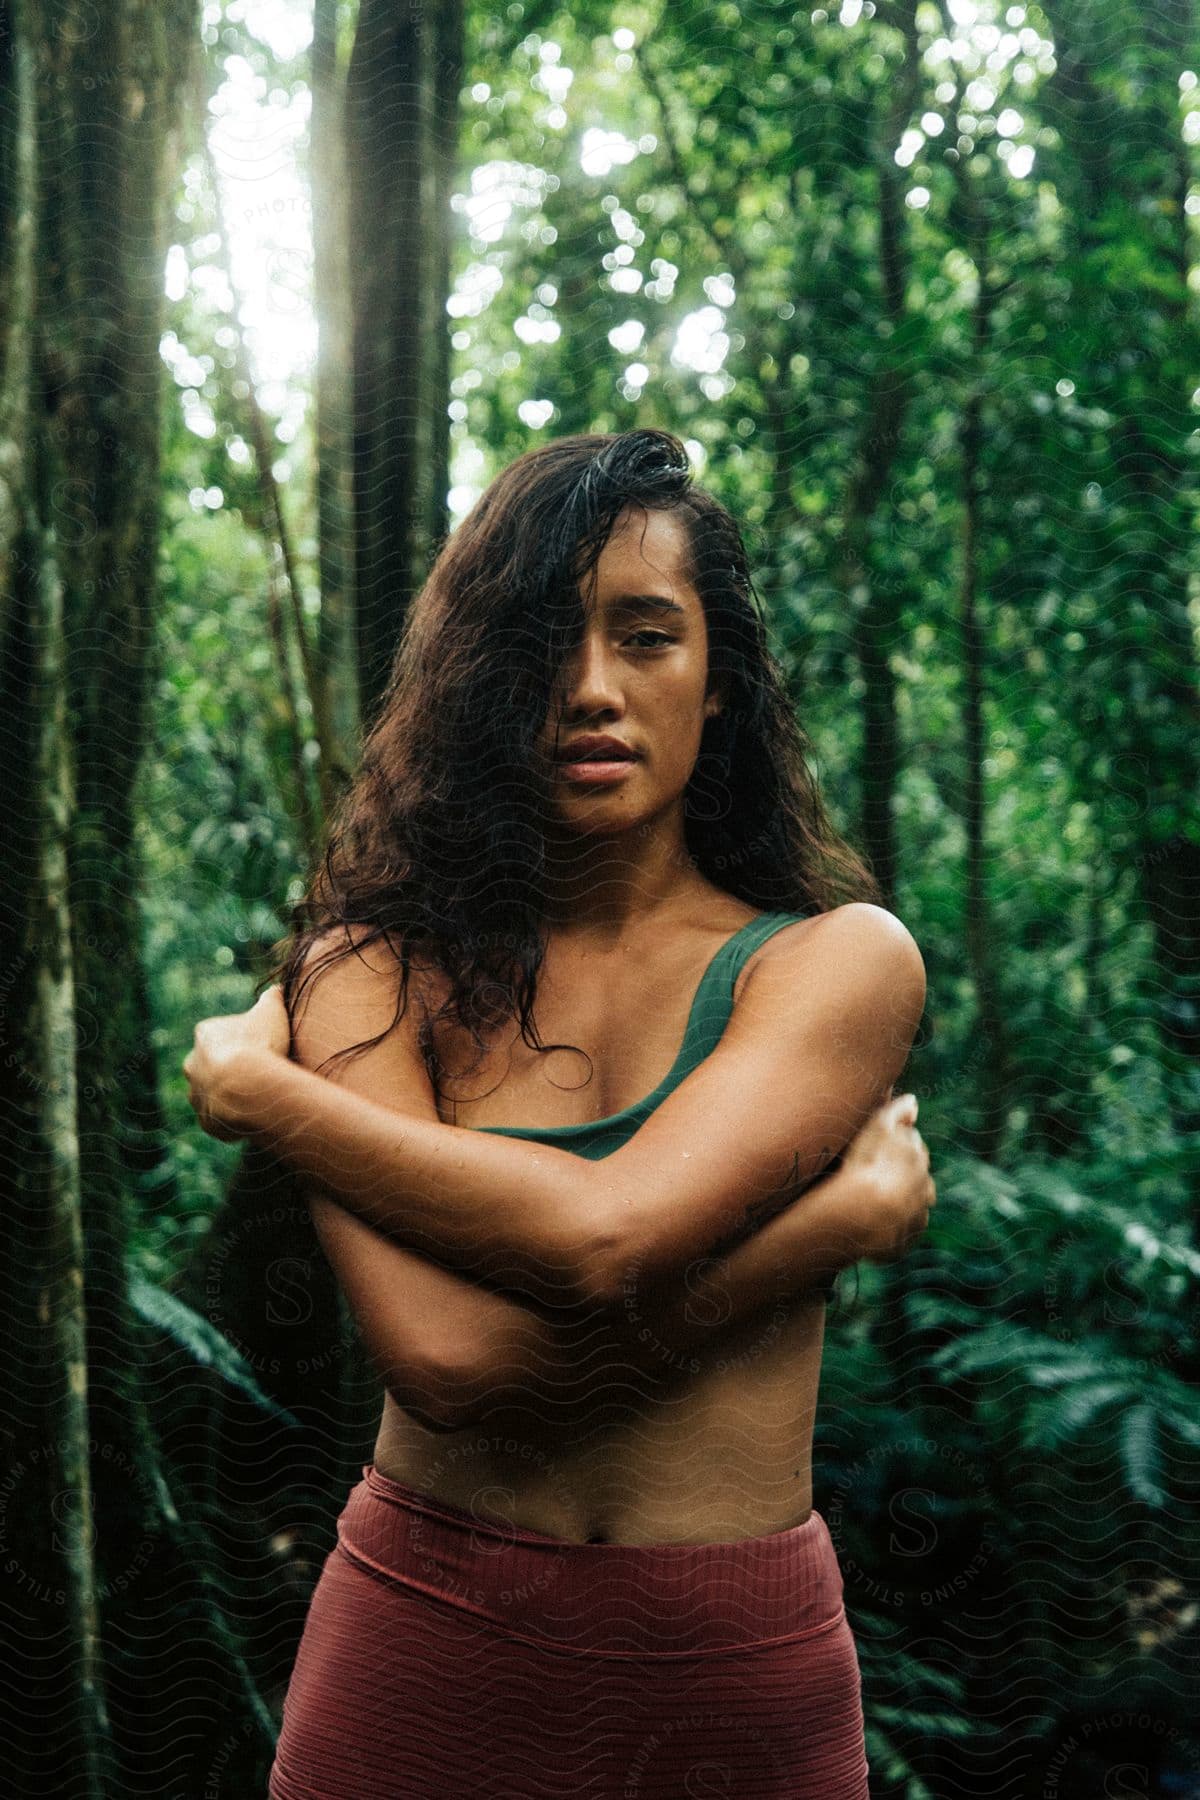 A happy woman in a jungle